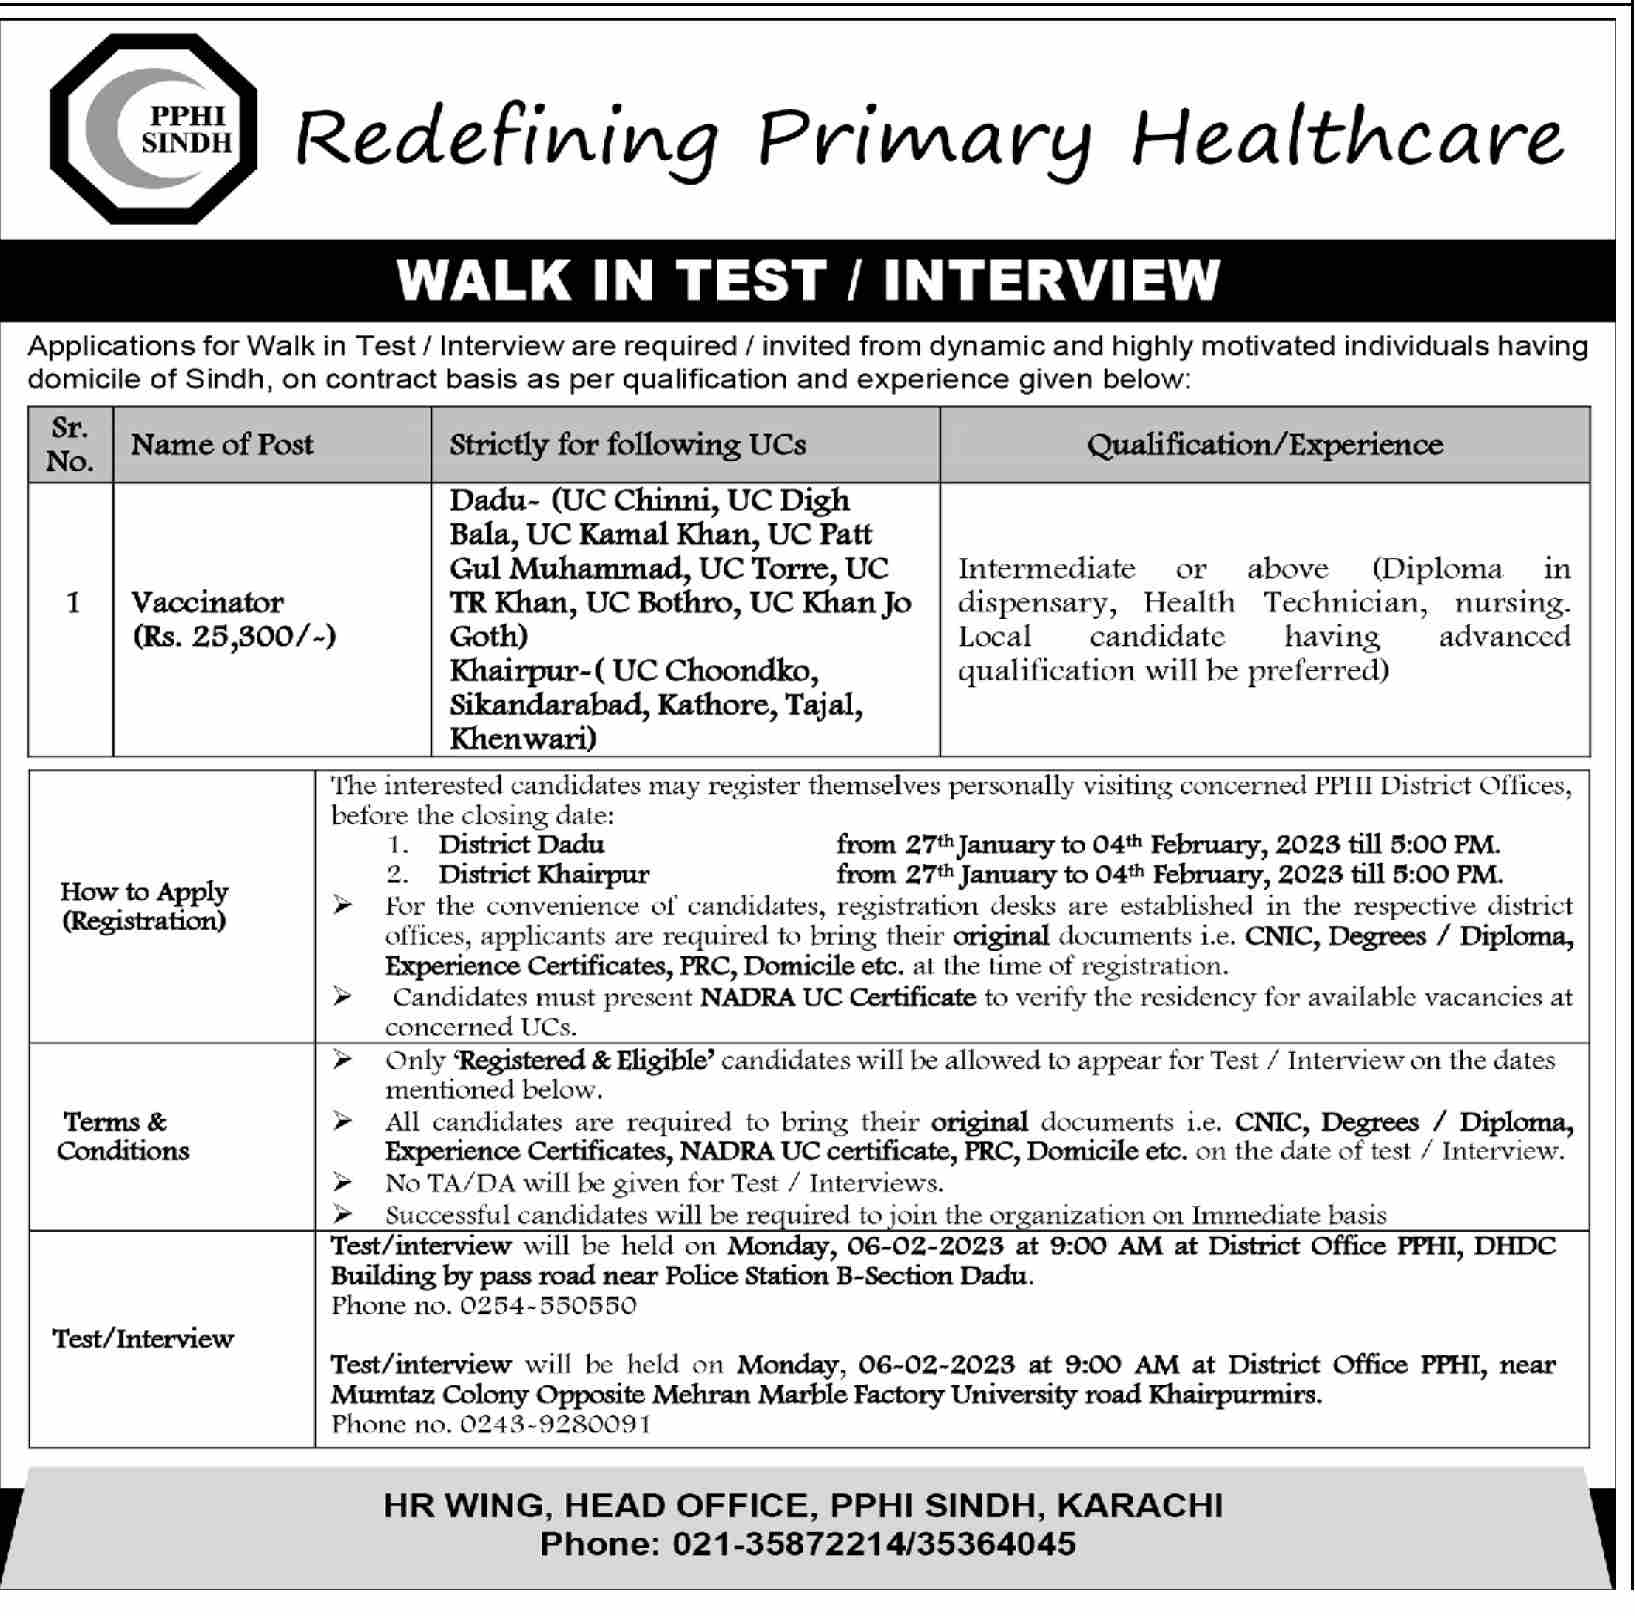 People Primary Health Initiative PPHI Sindh Jobs 2023